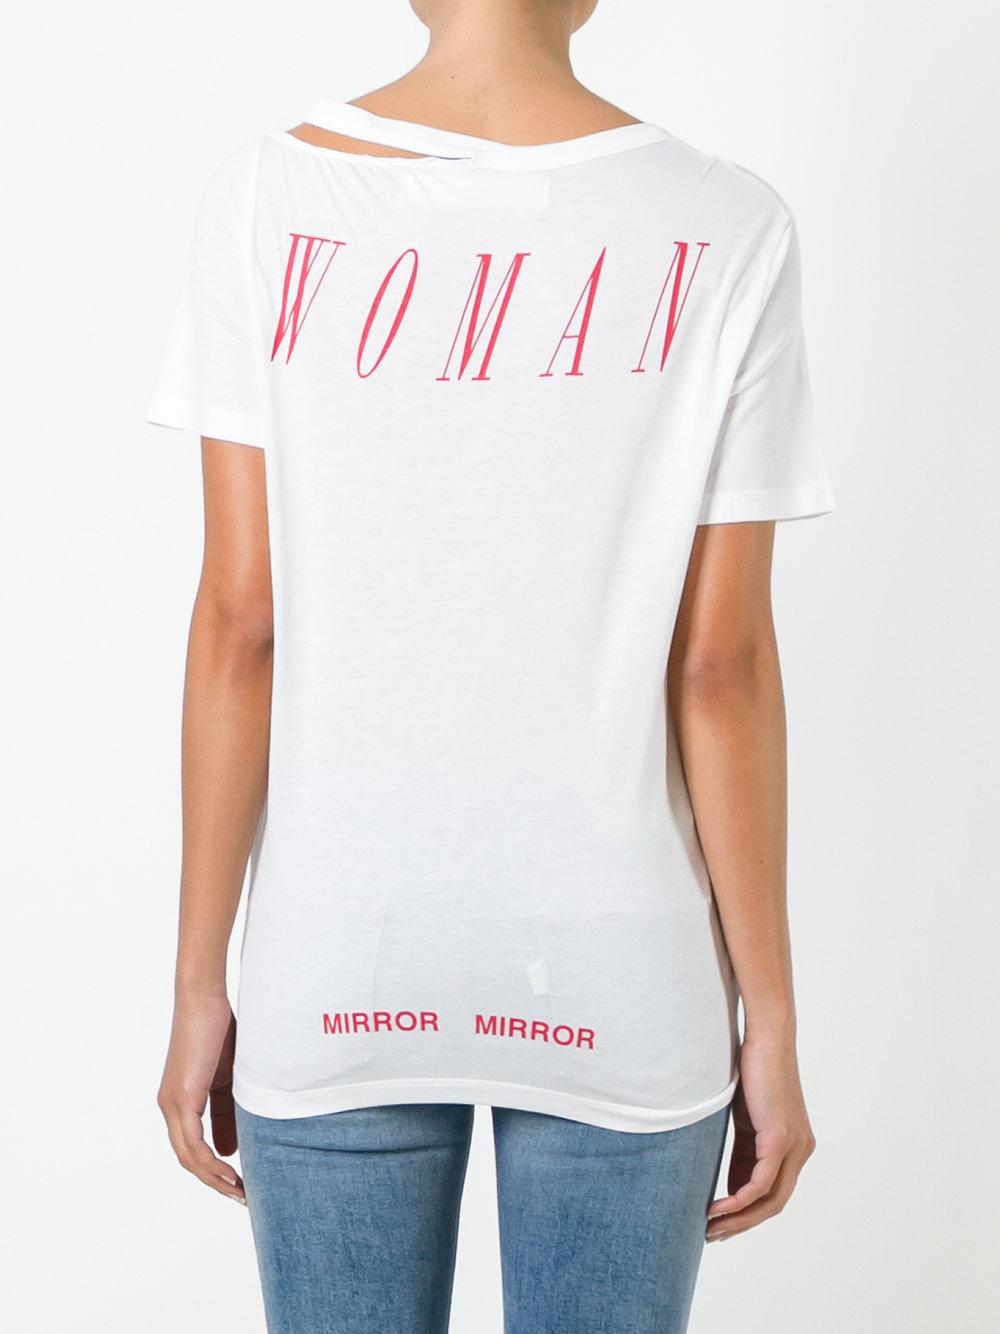 Off-White c/o Virgil Abloh Mirror Mirror Printed T-shirt in White | Lyst